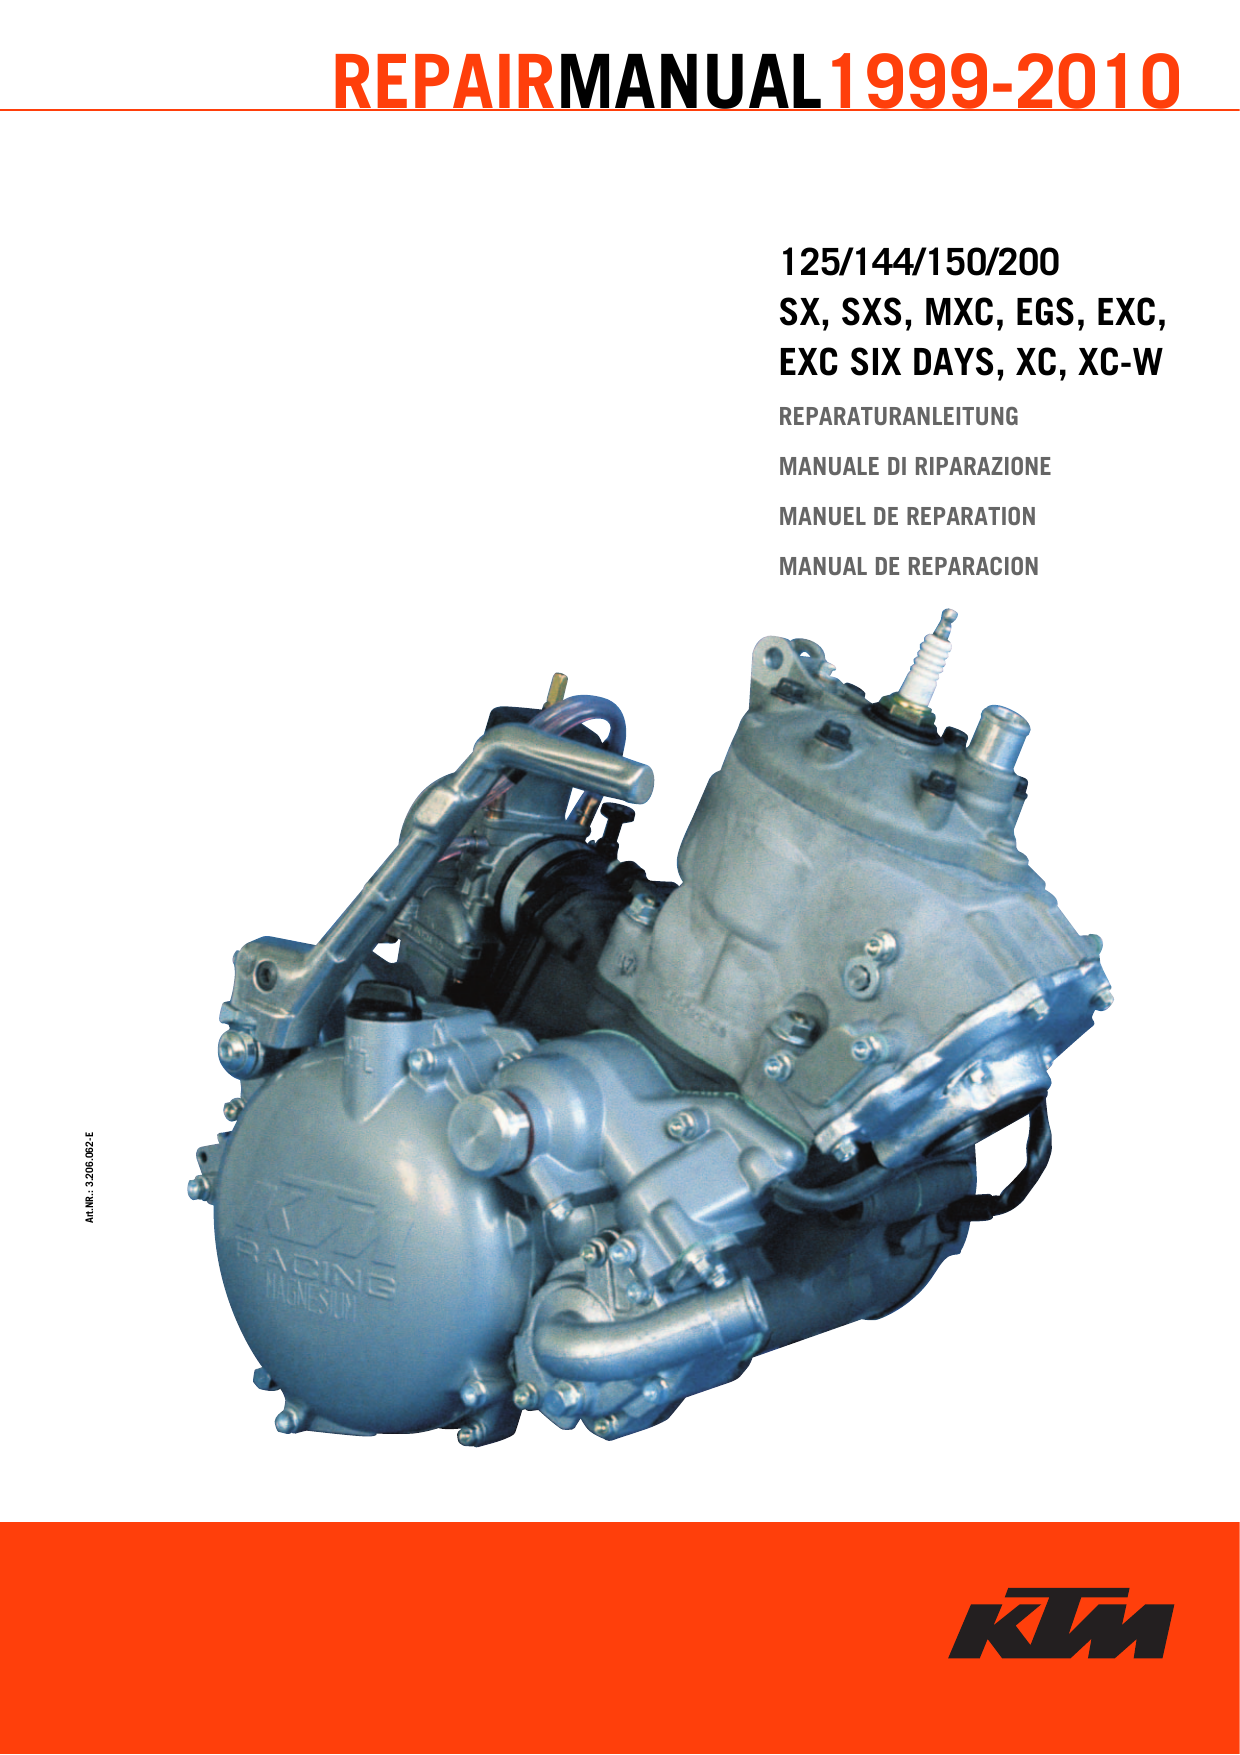 1999-2010 KTM 125, 144, 150, 200 SX, SXS, MXC, EGS, EXC, EXC SIX DAYS, XC, XC-W repair manual Preview image 1